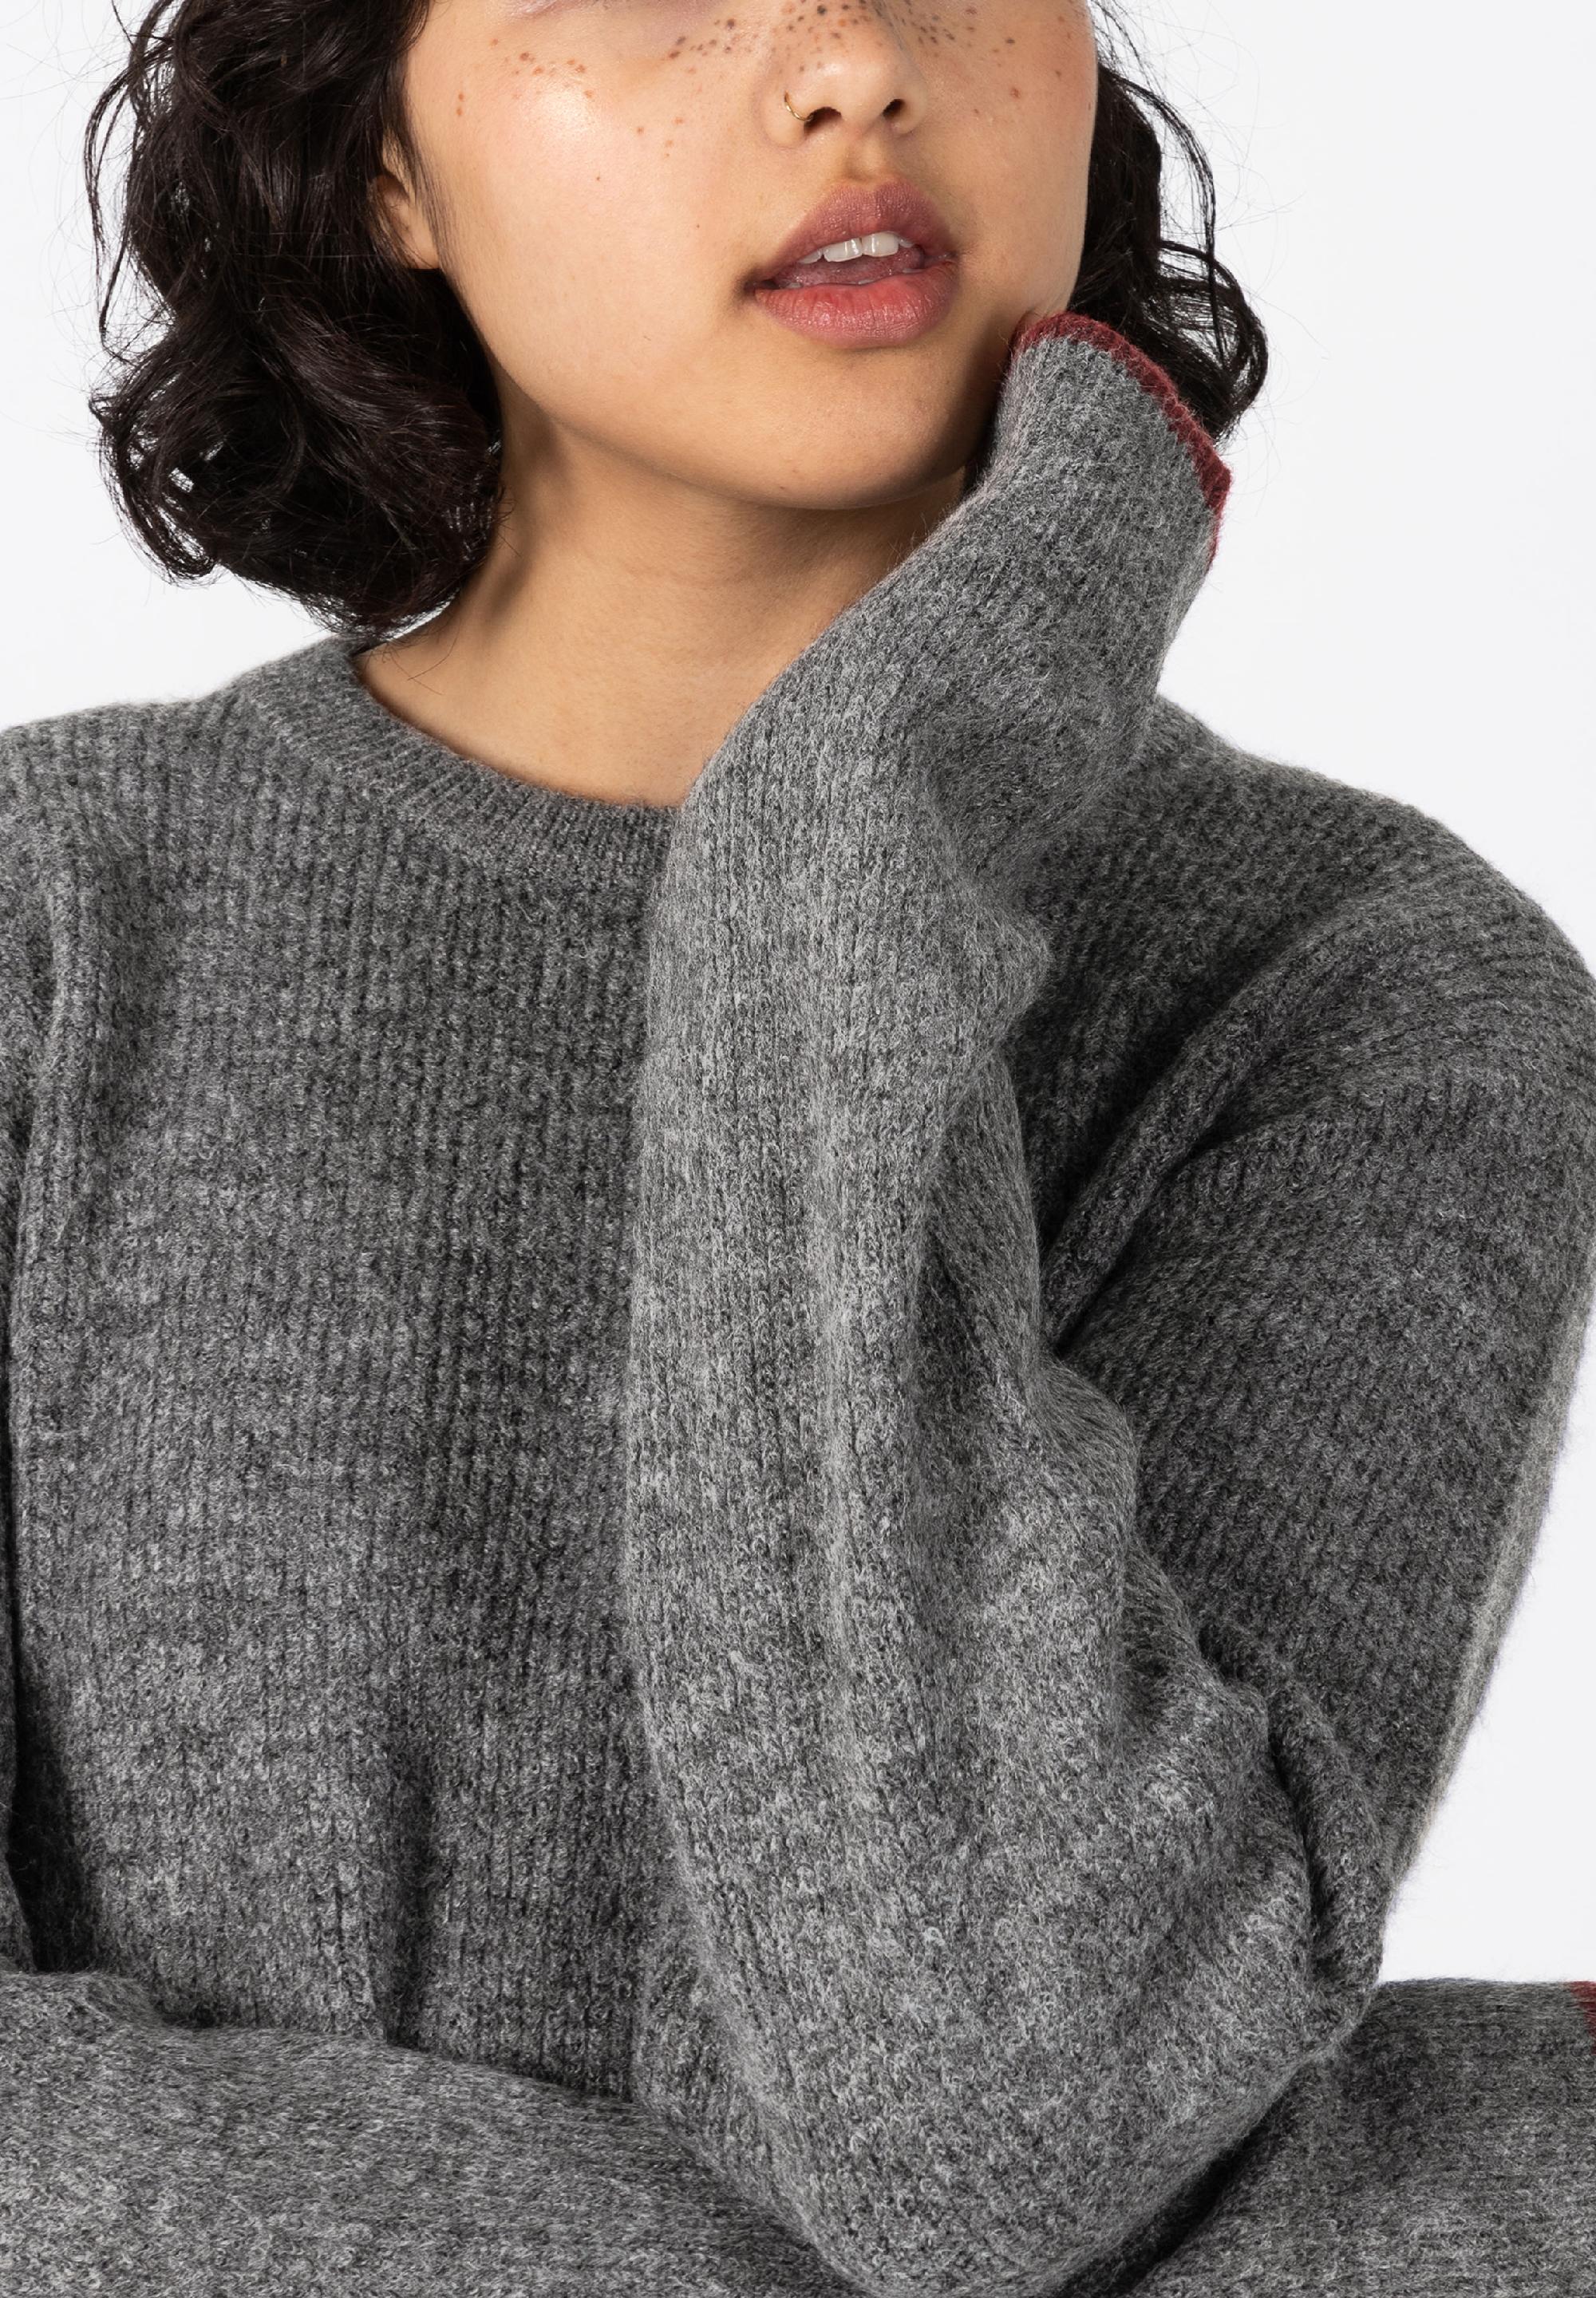 Unisex Knit Pullover